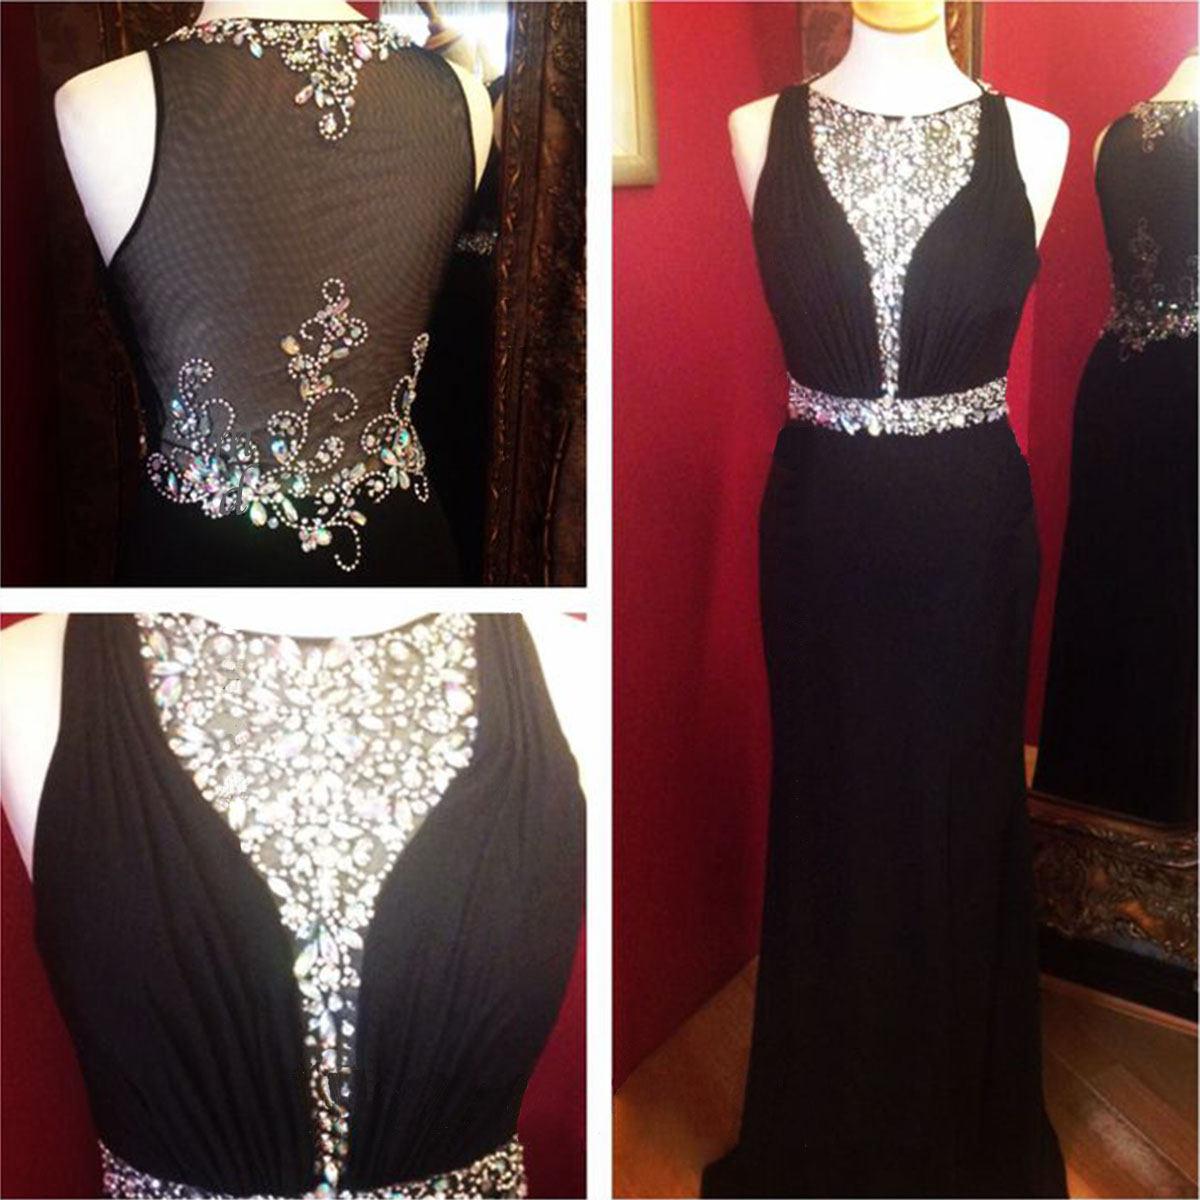 Hand Made Prom Dress, Black Prom Dress, Sparkly Prom Dress, Prom Dress 2015, Party Dress, Modest Prom Dress, Sexy Prom Dress, Bd259